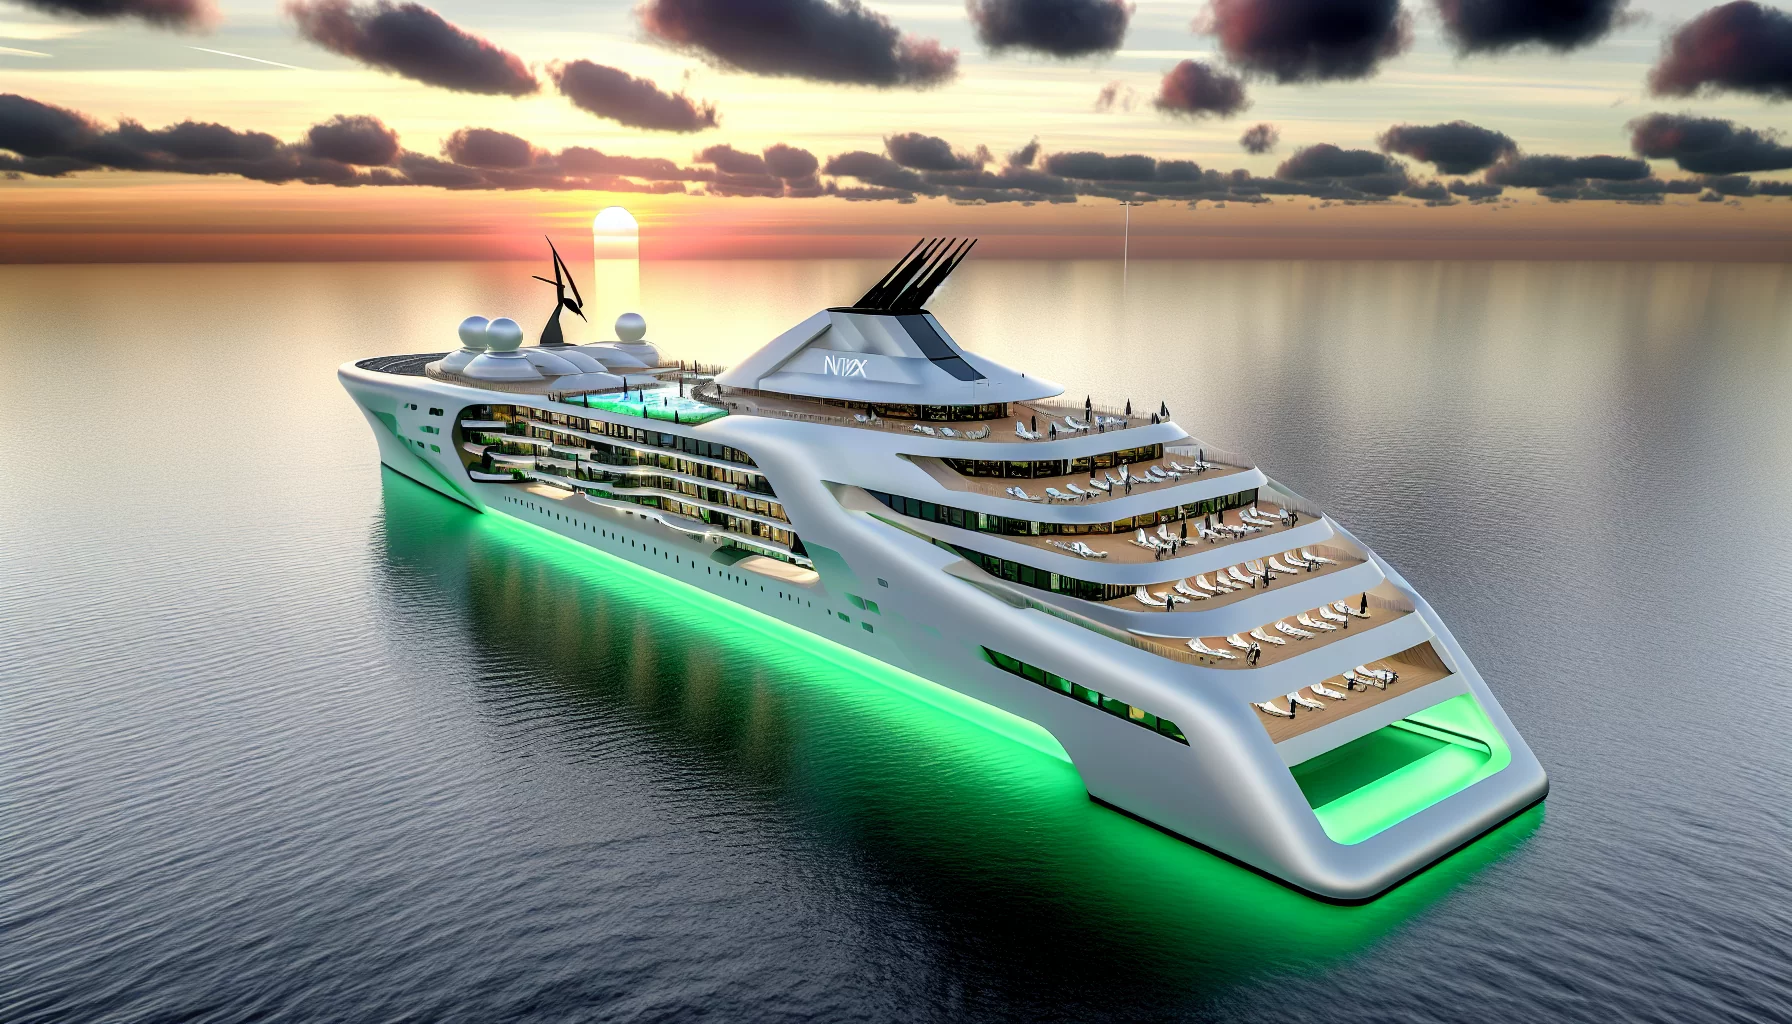 Introducing neonyx cruises: the future of eco-luxury travel on the open seas